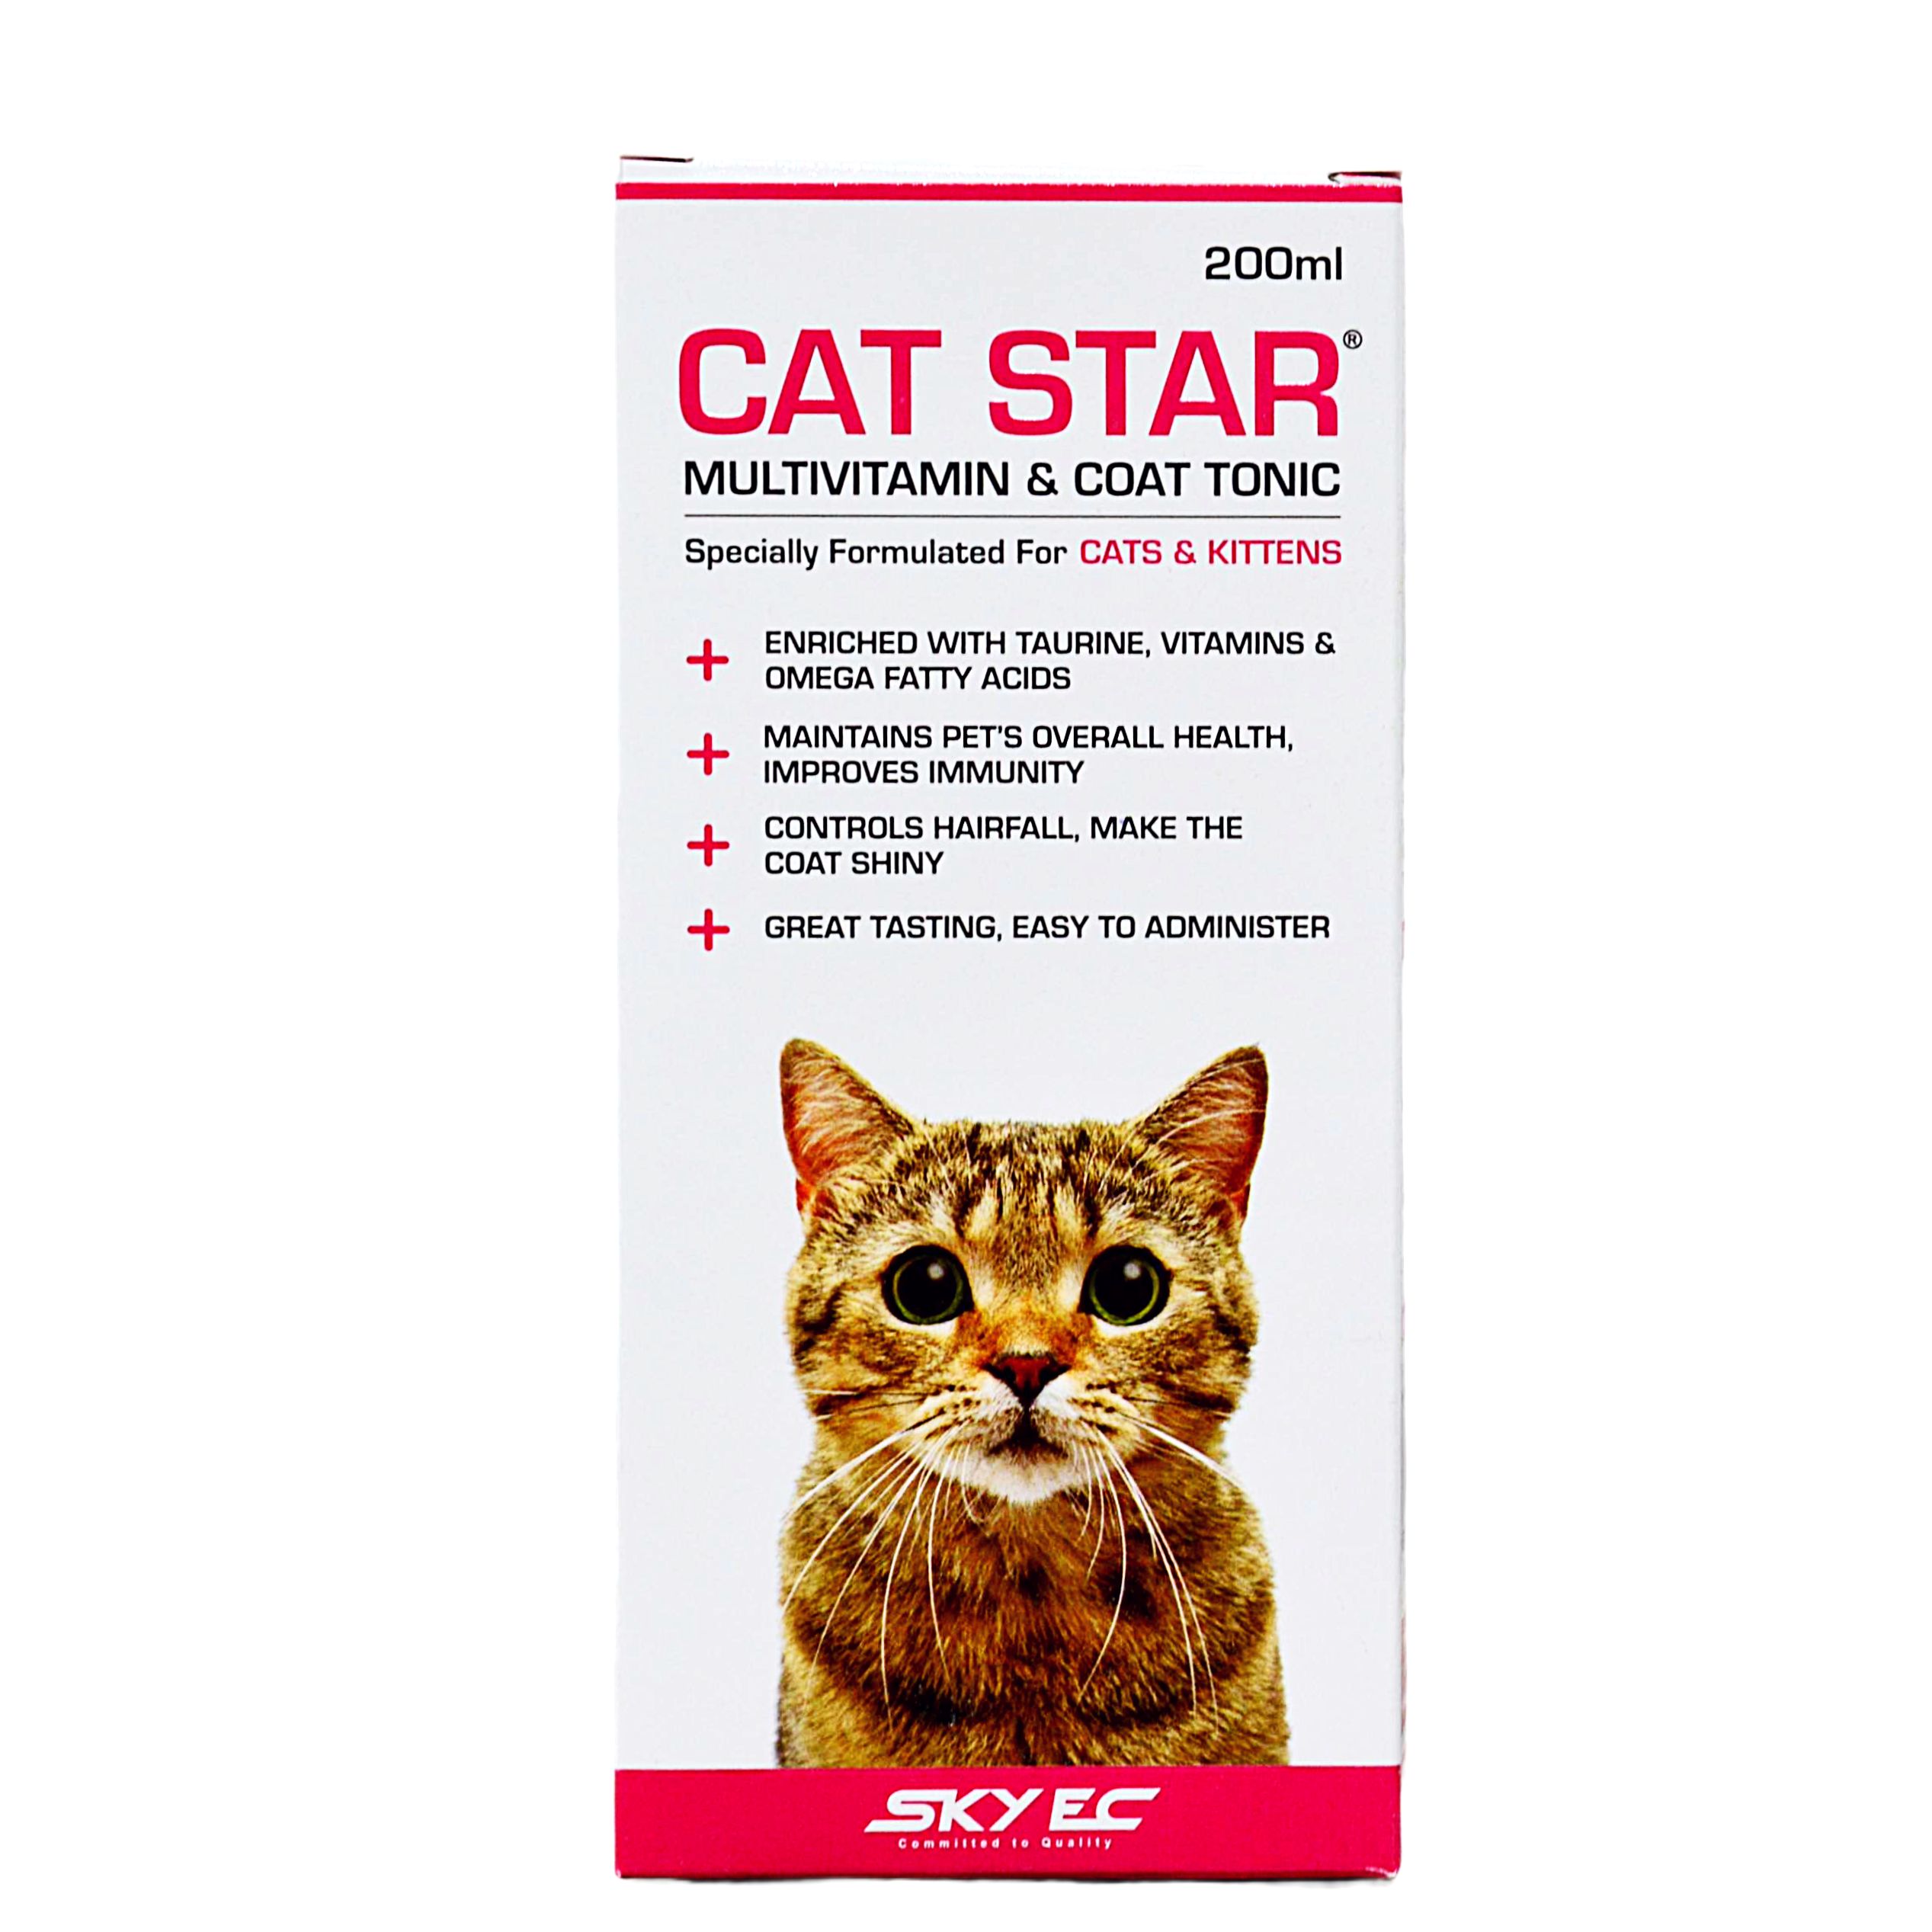 Sky EC CAT STAR FOR MULTIVITAMIN & COAT TONIC SYRUP- 200ML – shriommart